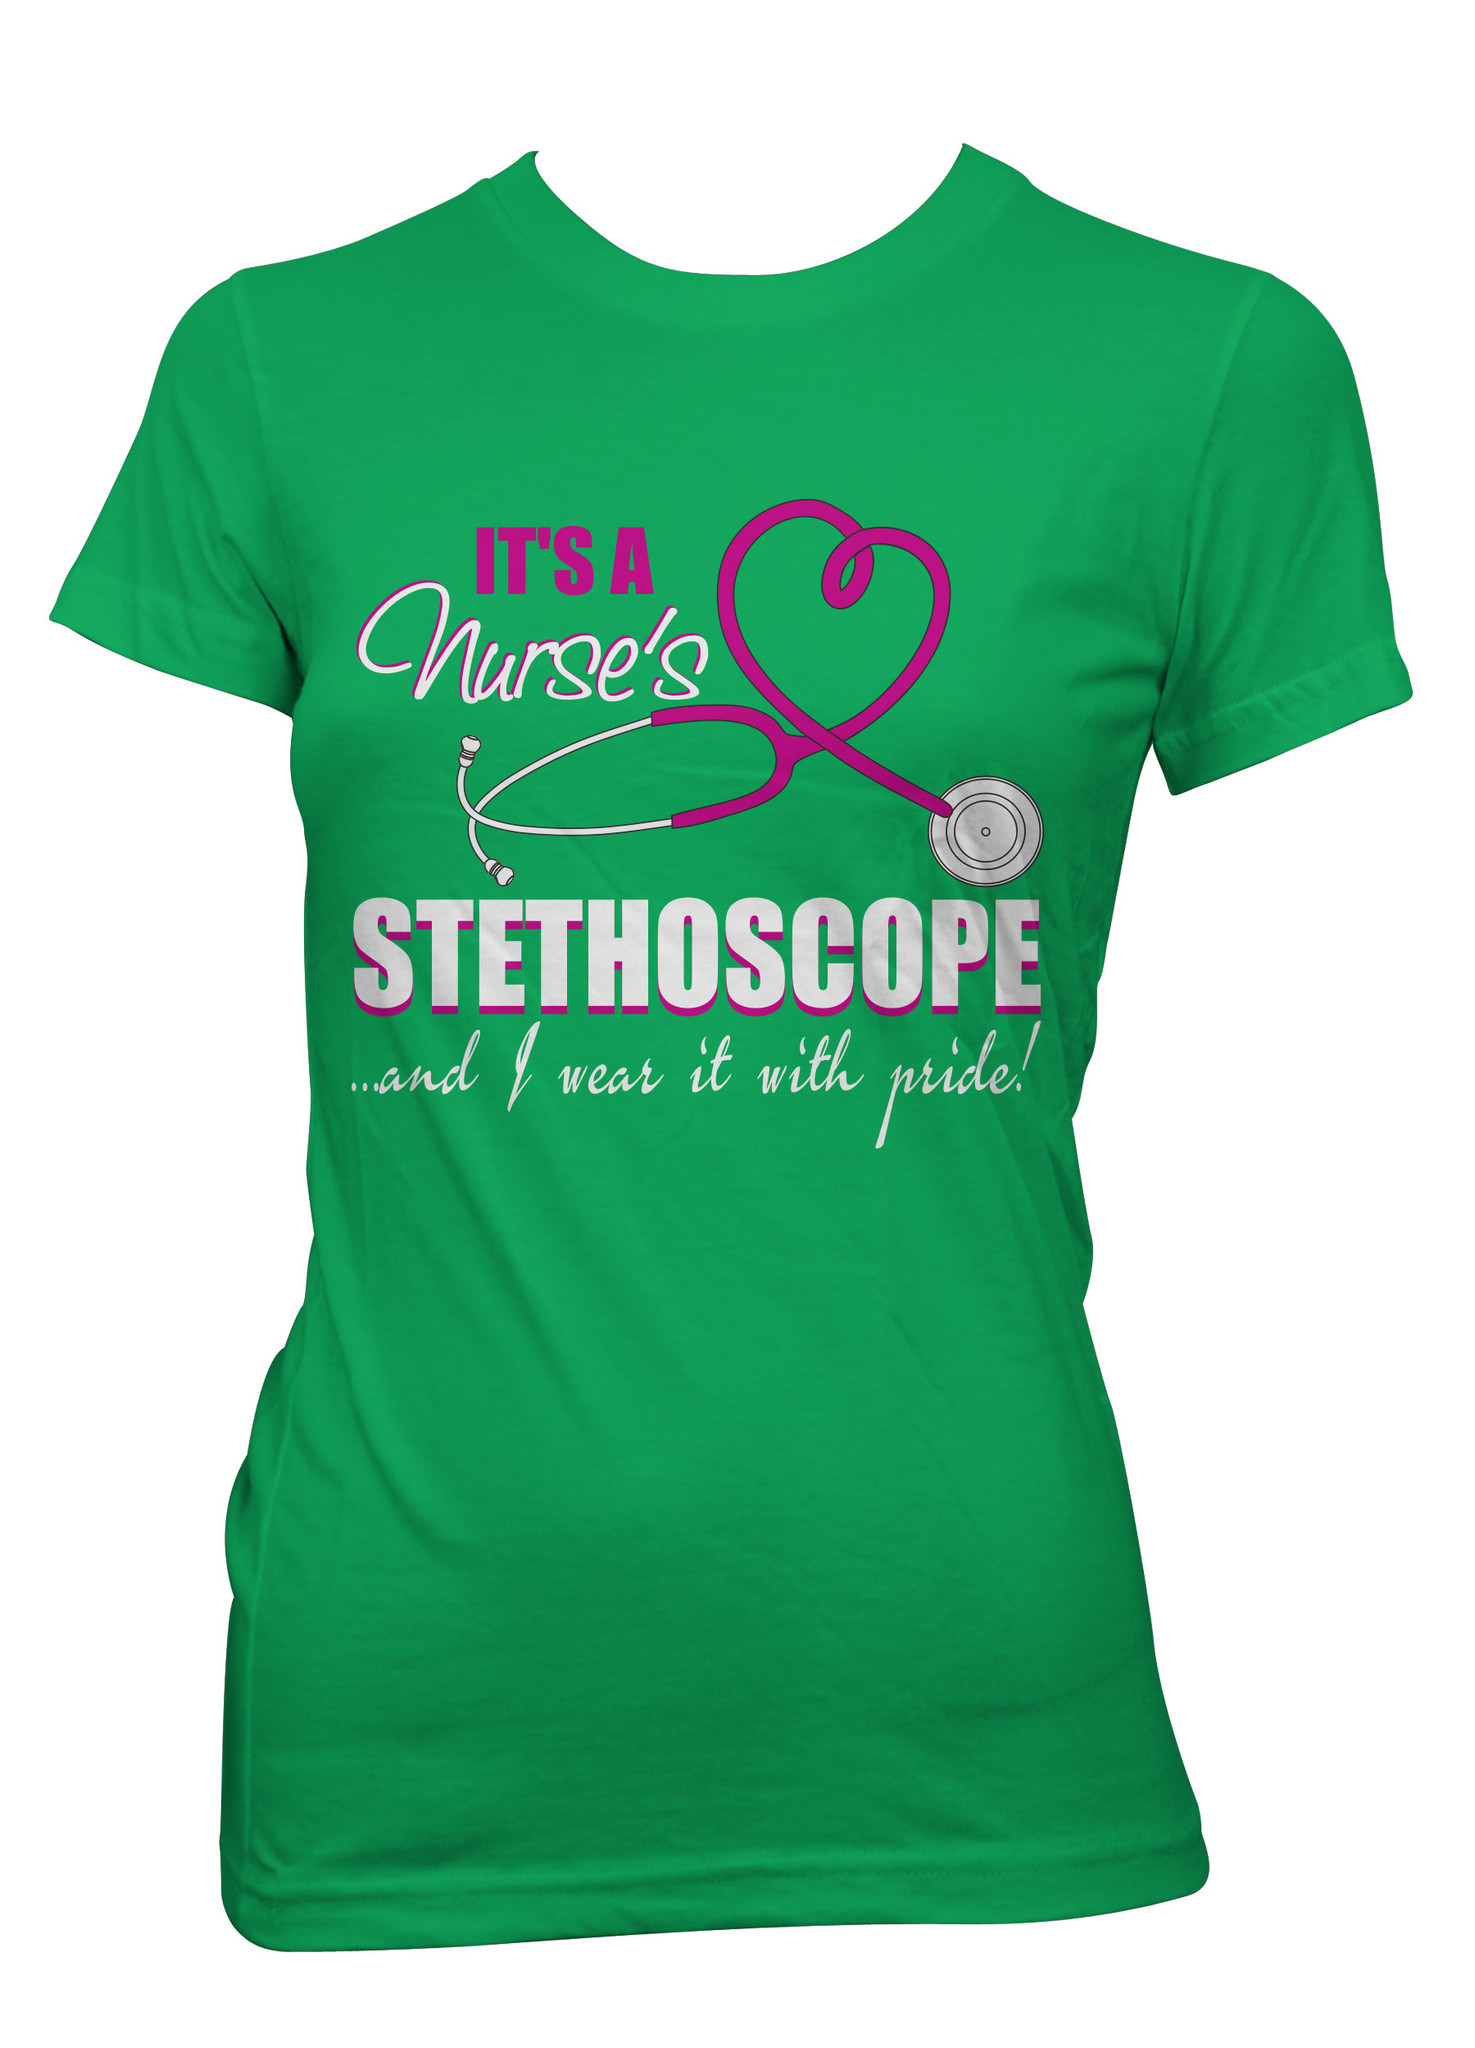 "It's A Nurse's Stethoscope..." T-Shirt